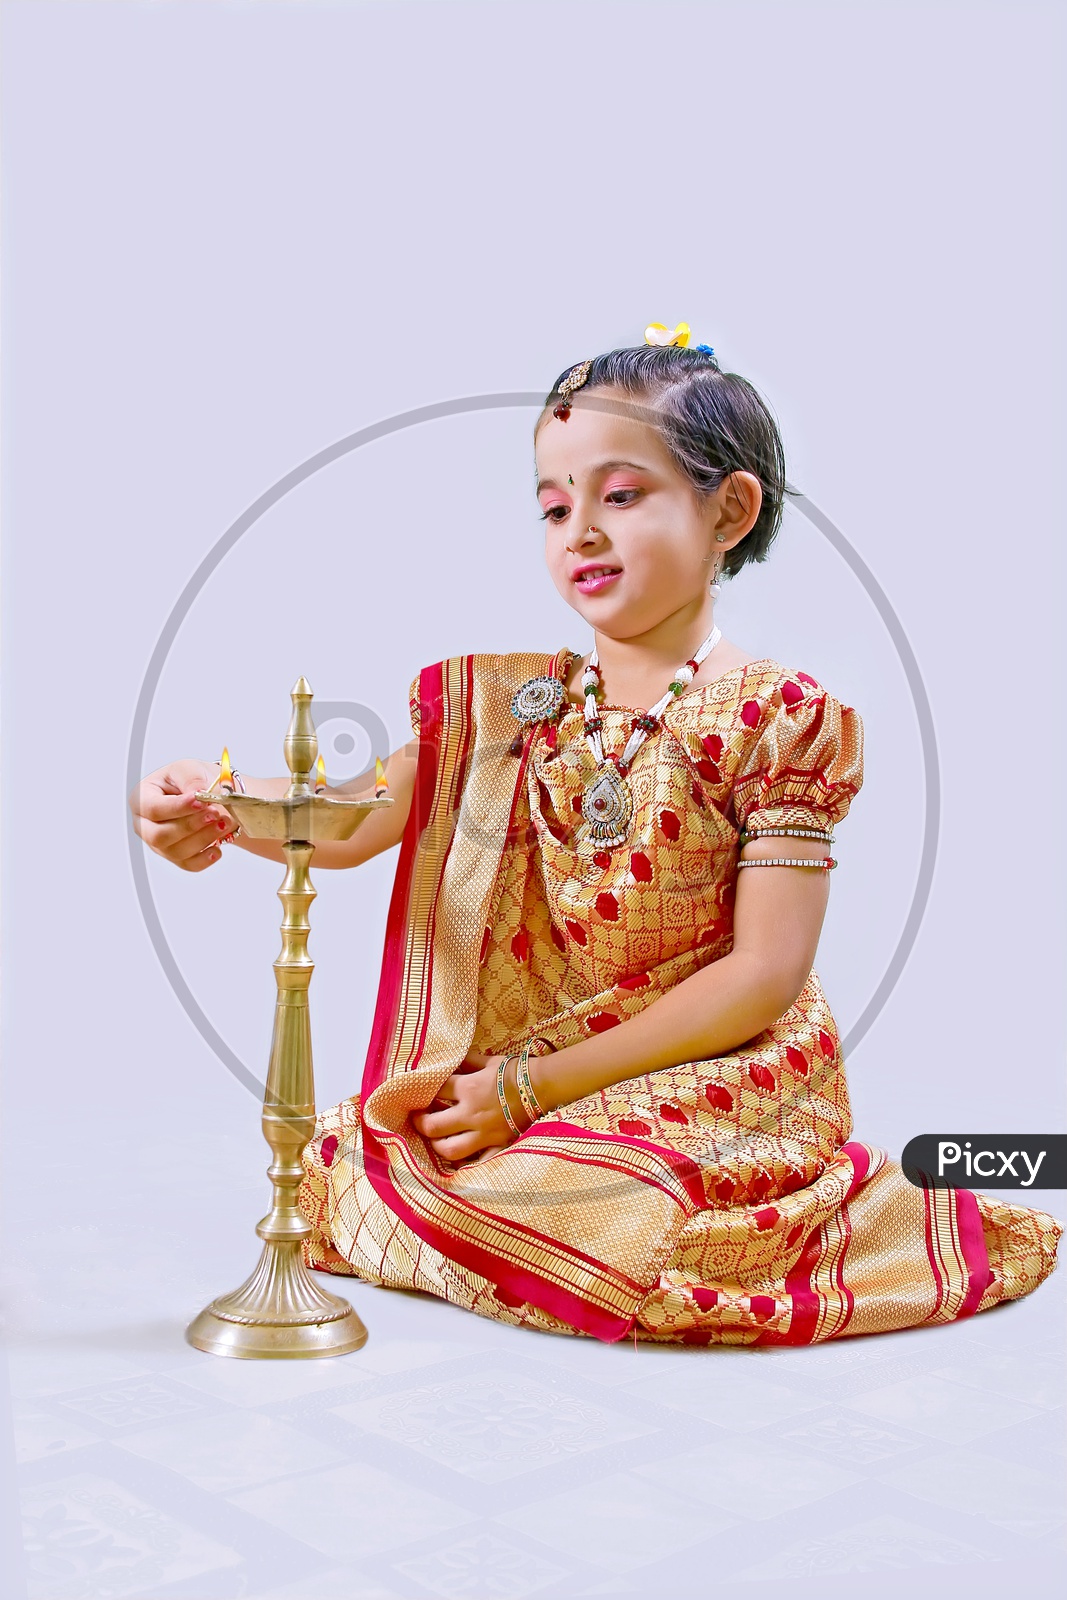 Indian Girl Child lighting Diya in Traditional Dress for Festival